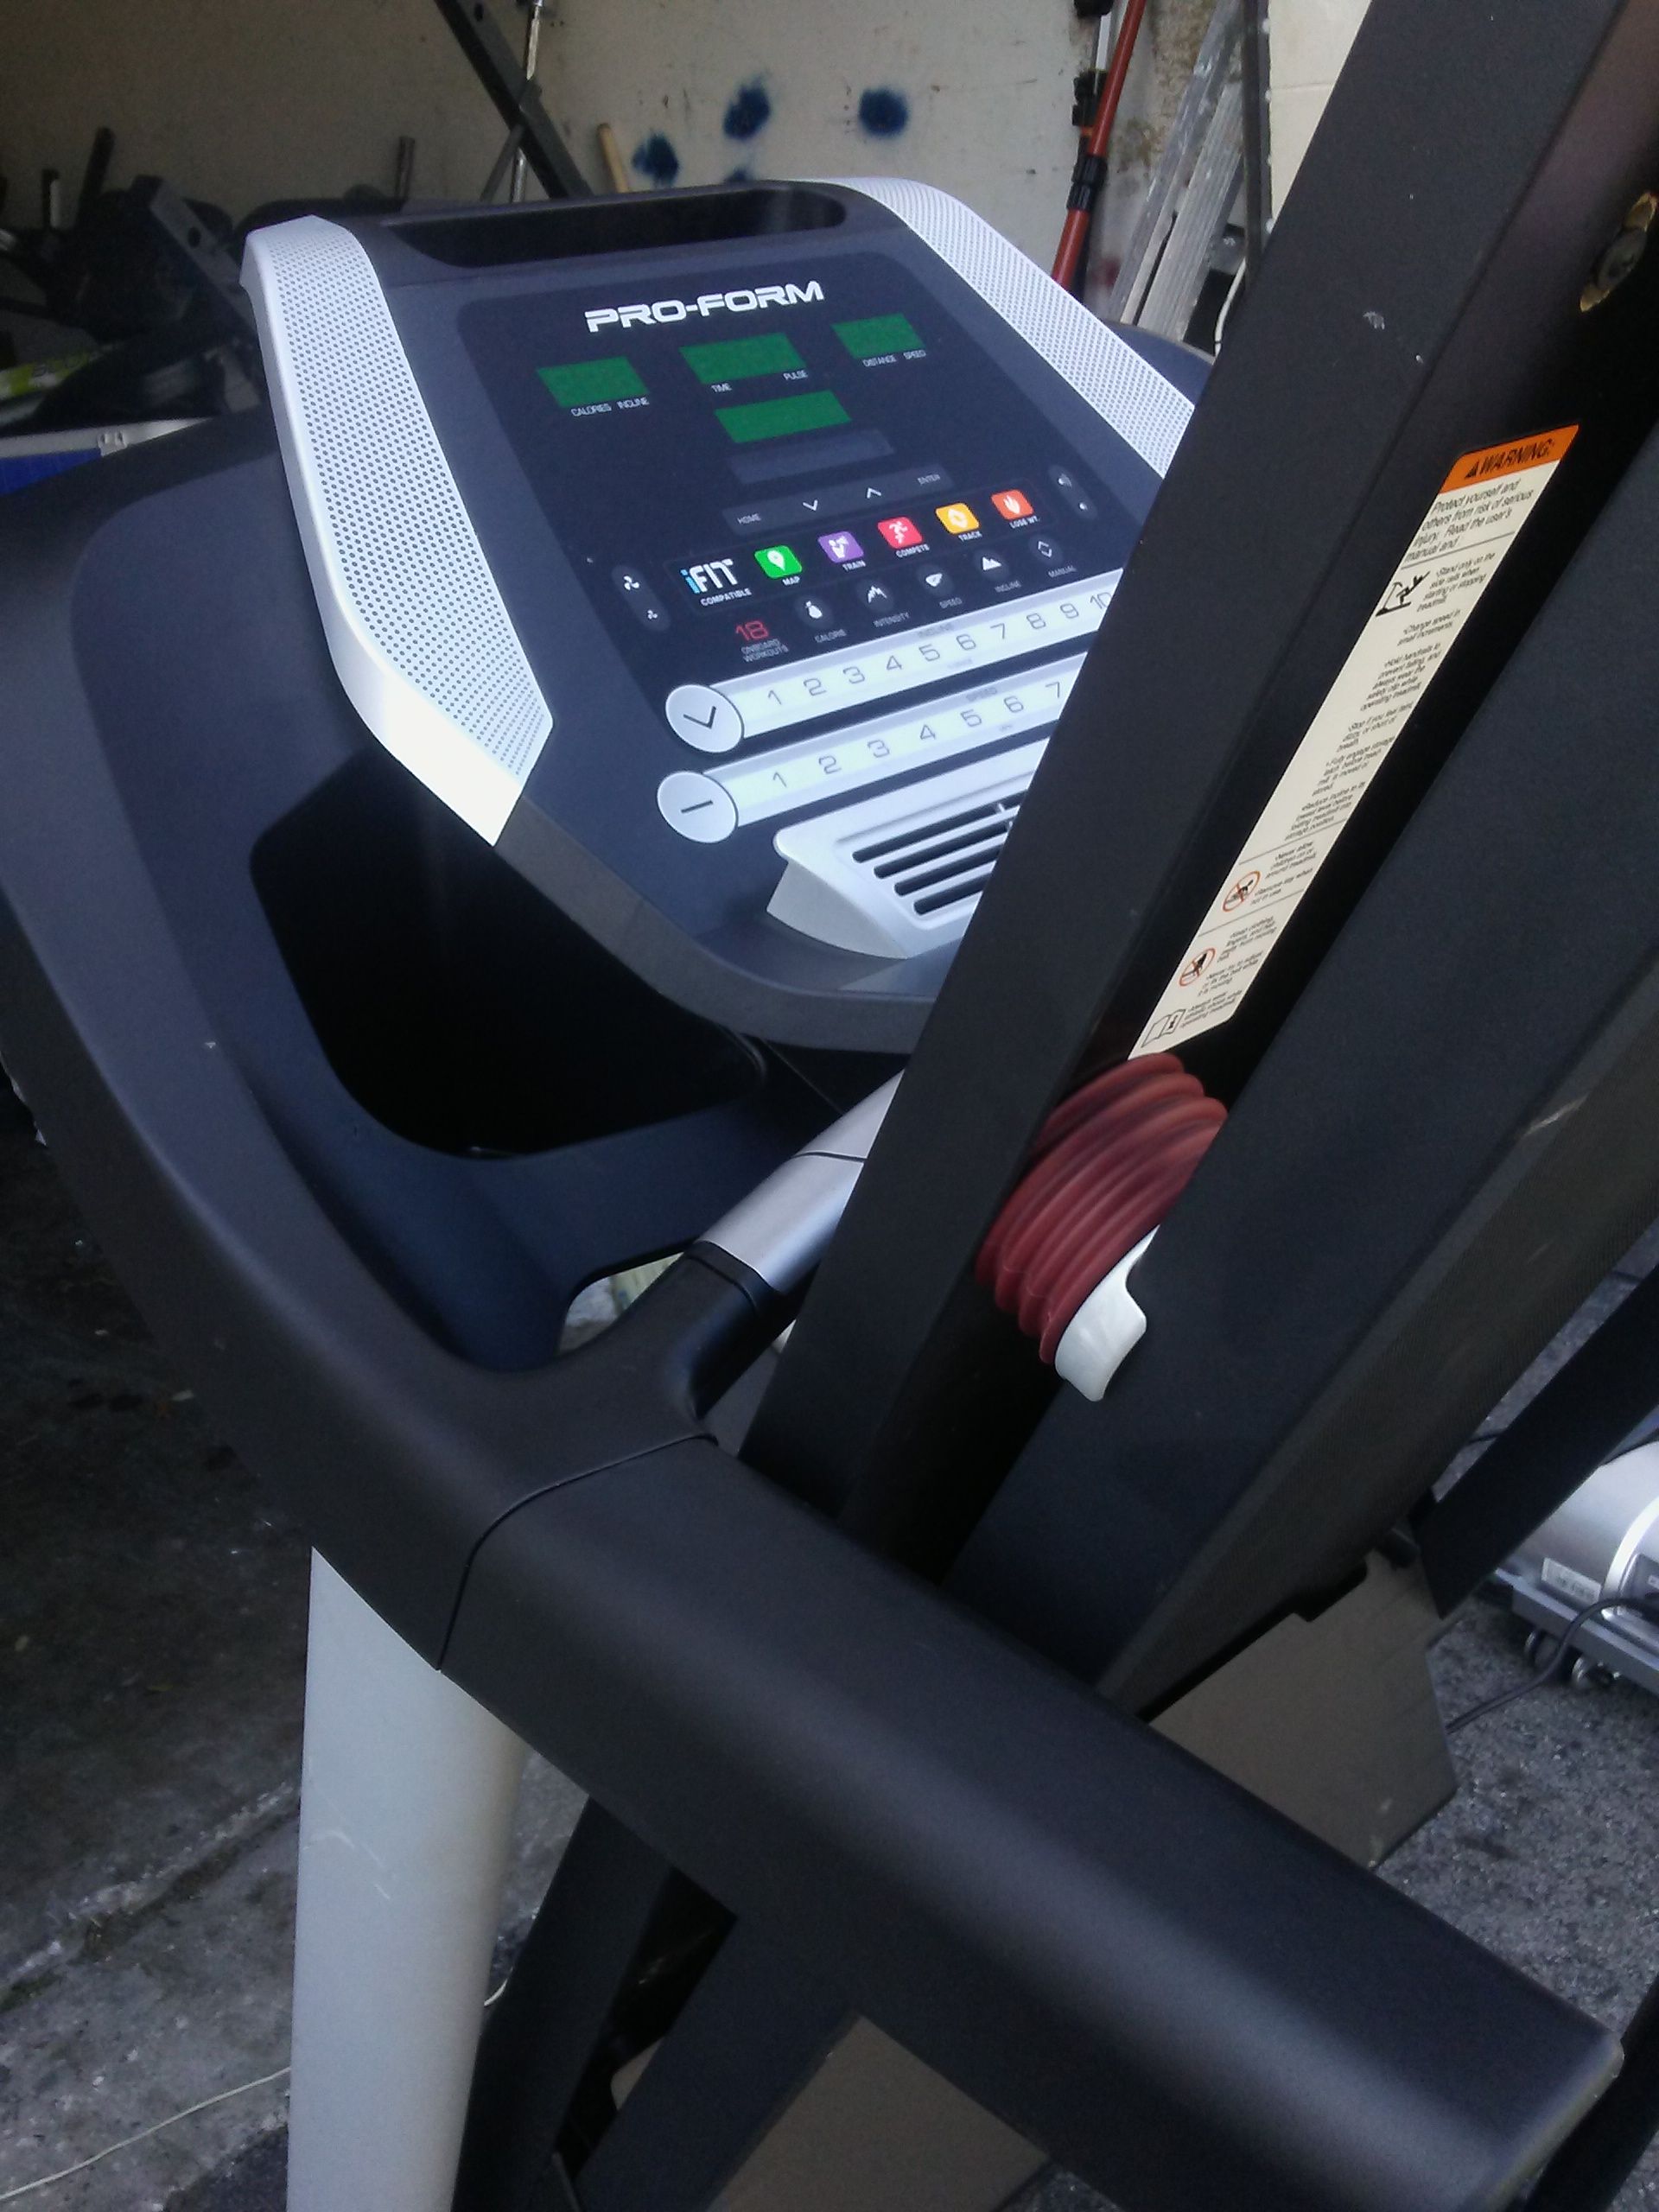 Proform treadmill Performance 400c